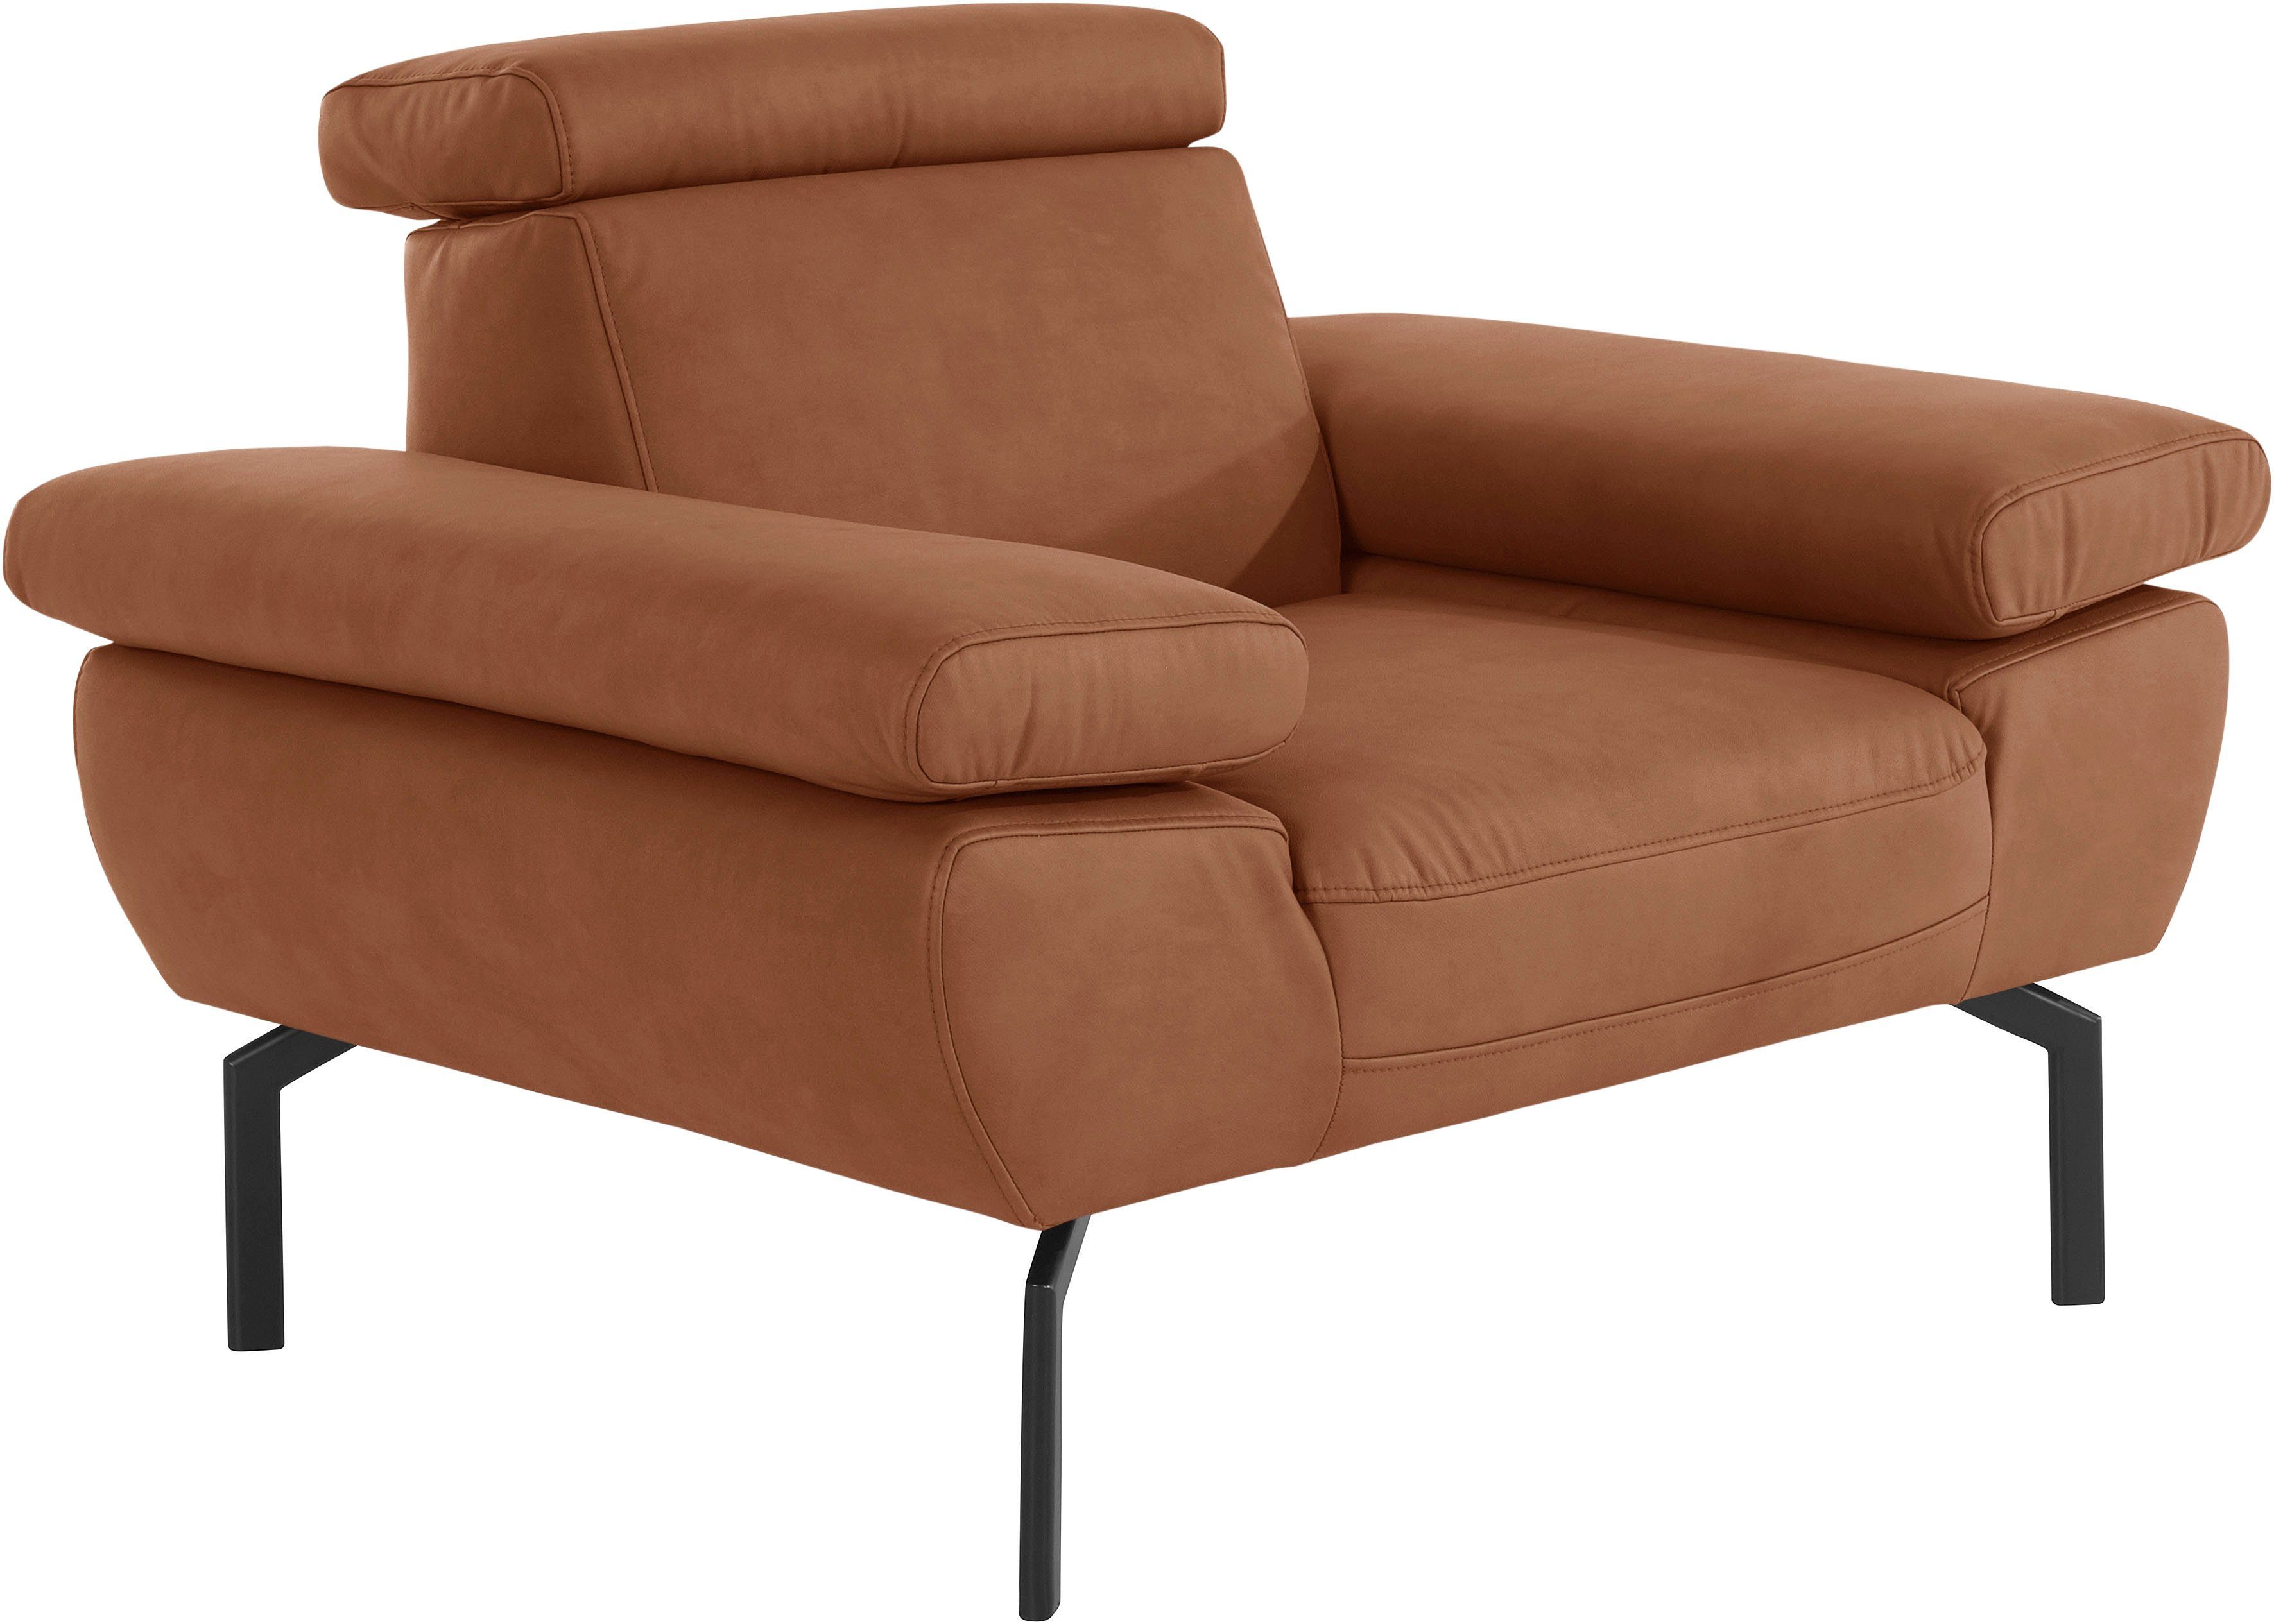 Places of Style Sessel mit Lederoptik in Luxus, wahlweise Luxus-Microfaser Rückenverstellung, Trapino